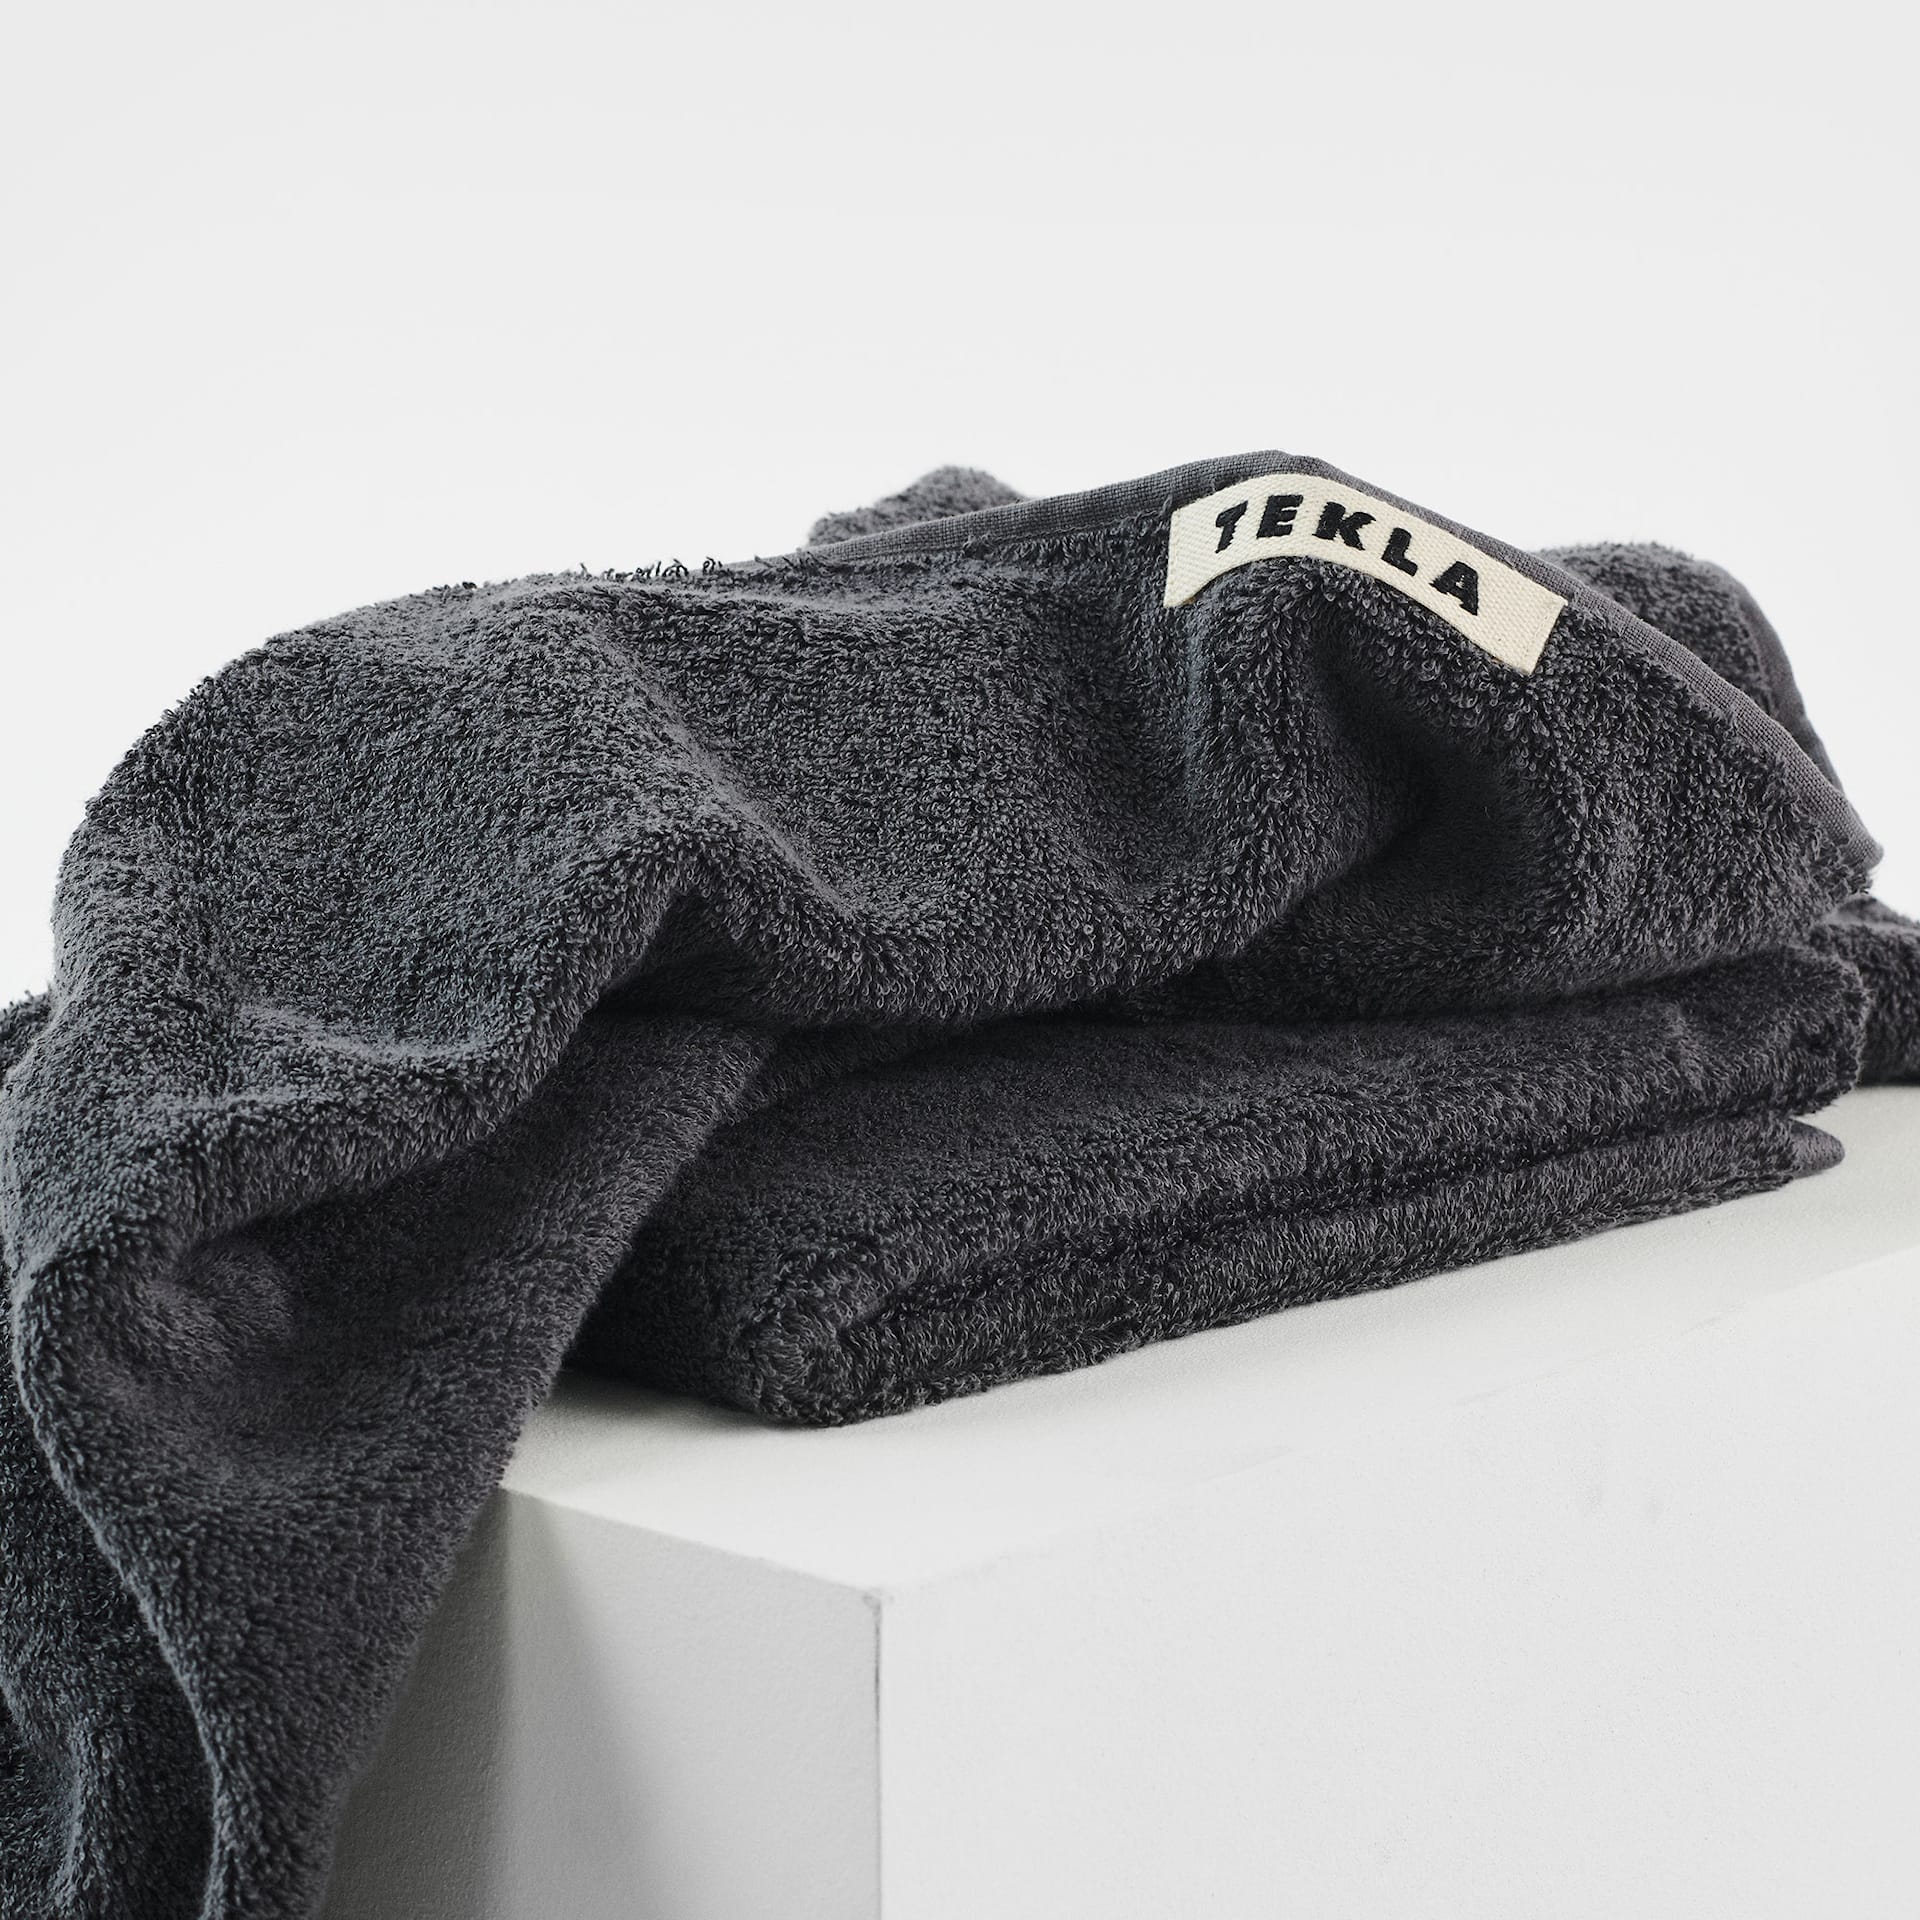 Terry Towel Charcoal Grey - TEKLA - NO GA